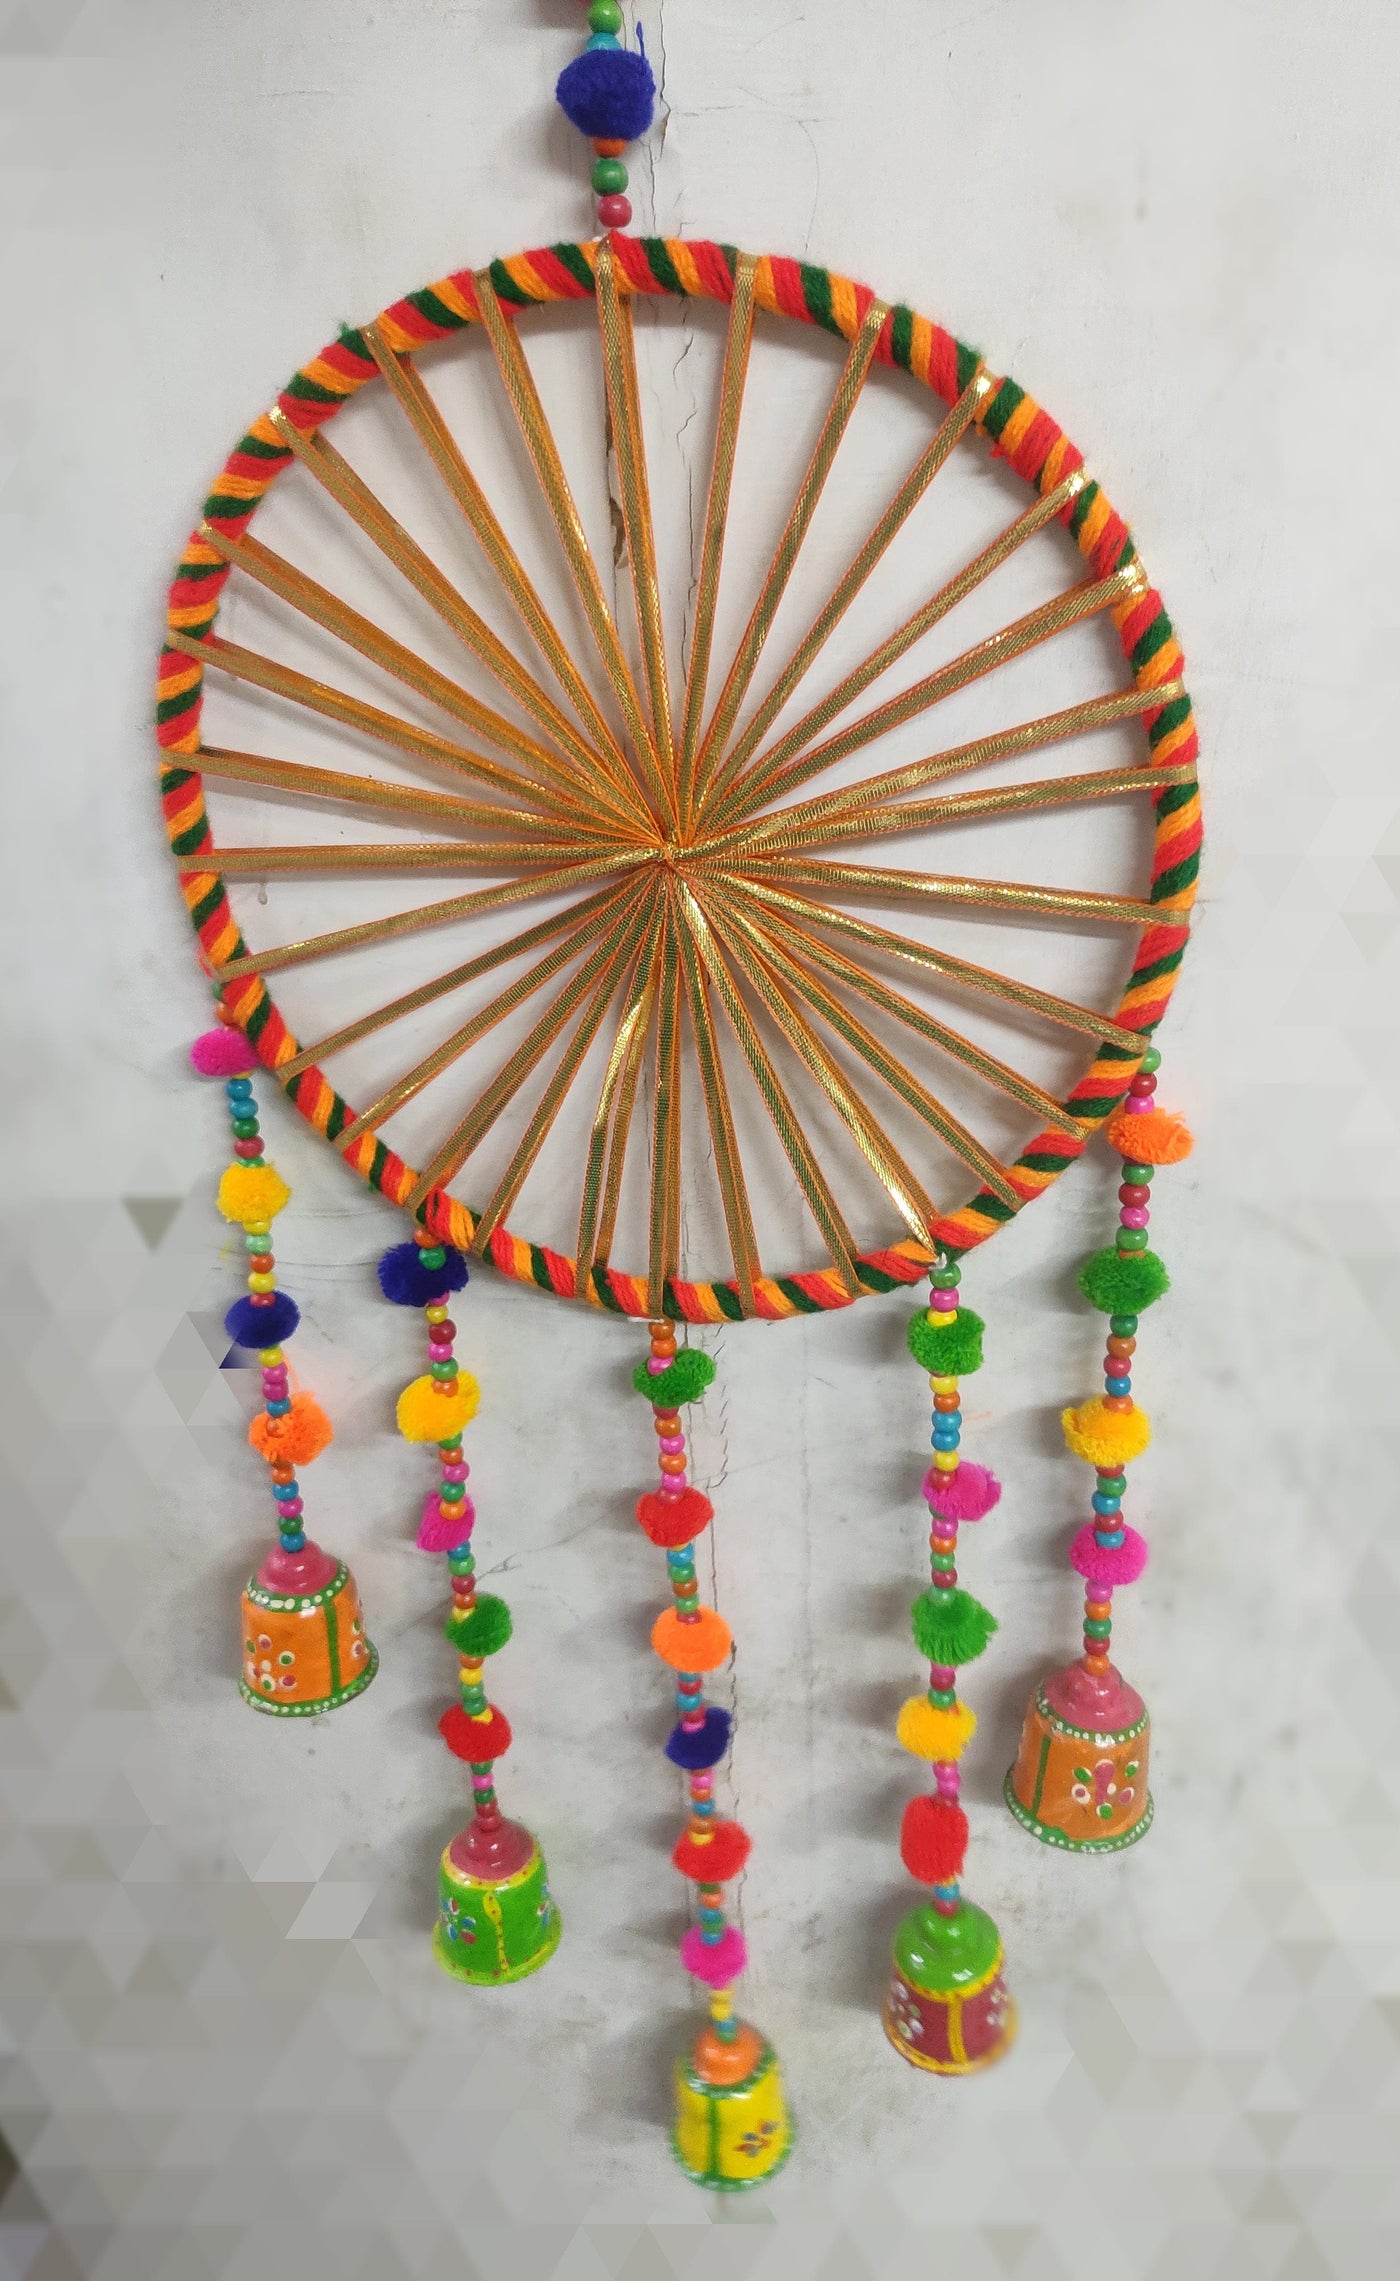 75 Rs each hanging on buying 🏷in bulk gota hangings LAMANSH® 10 inch Round Gota Chakri Hangings for Festive & Wedding Decoration